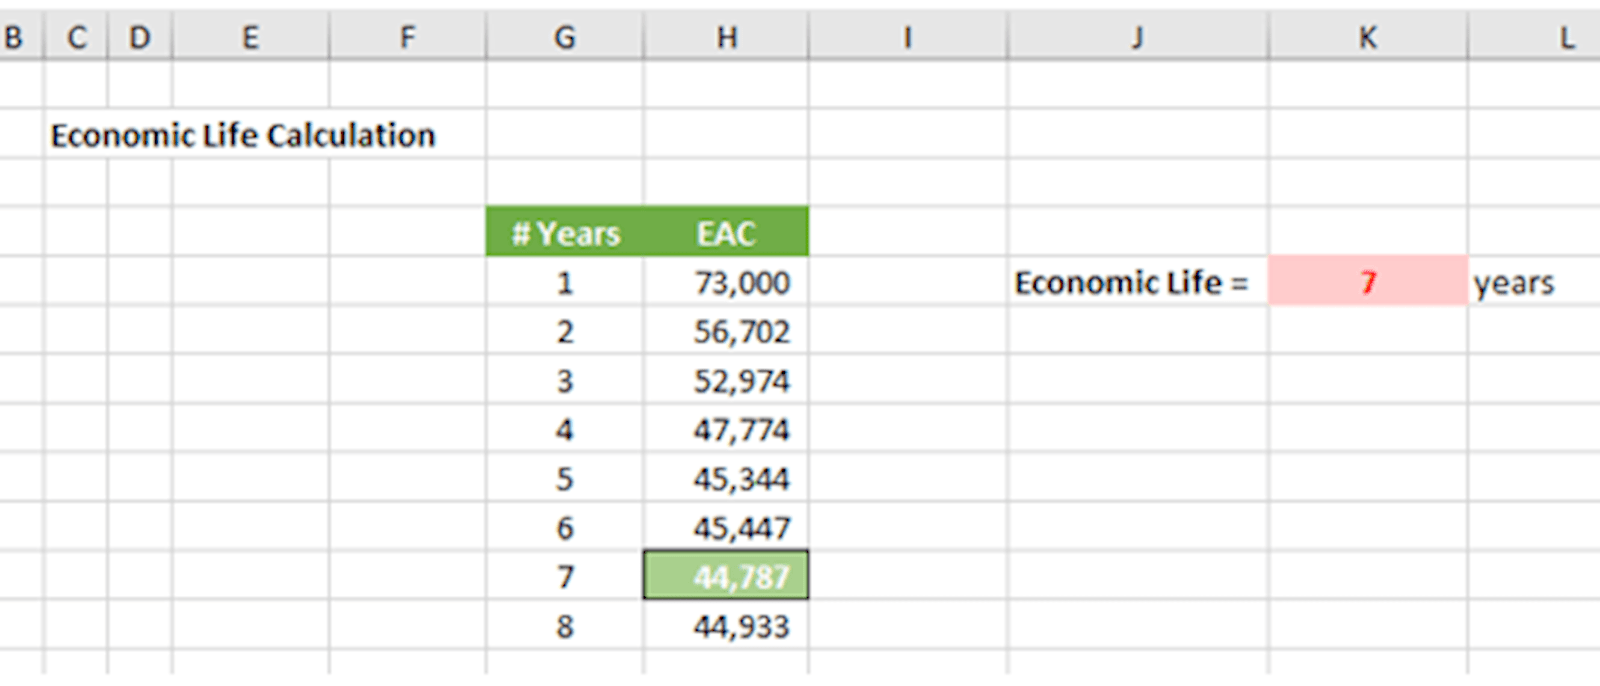 Image of economic life calculation